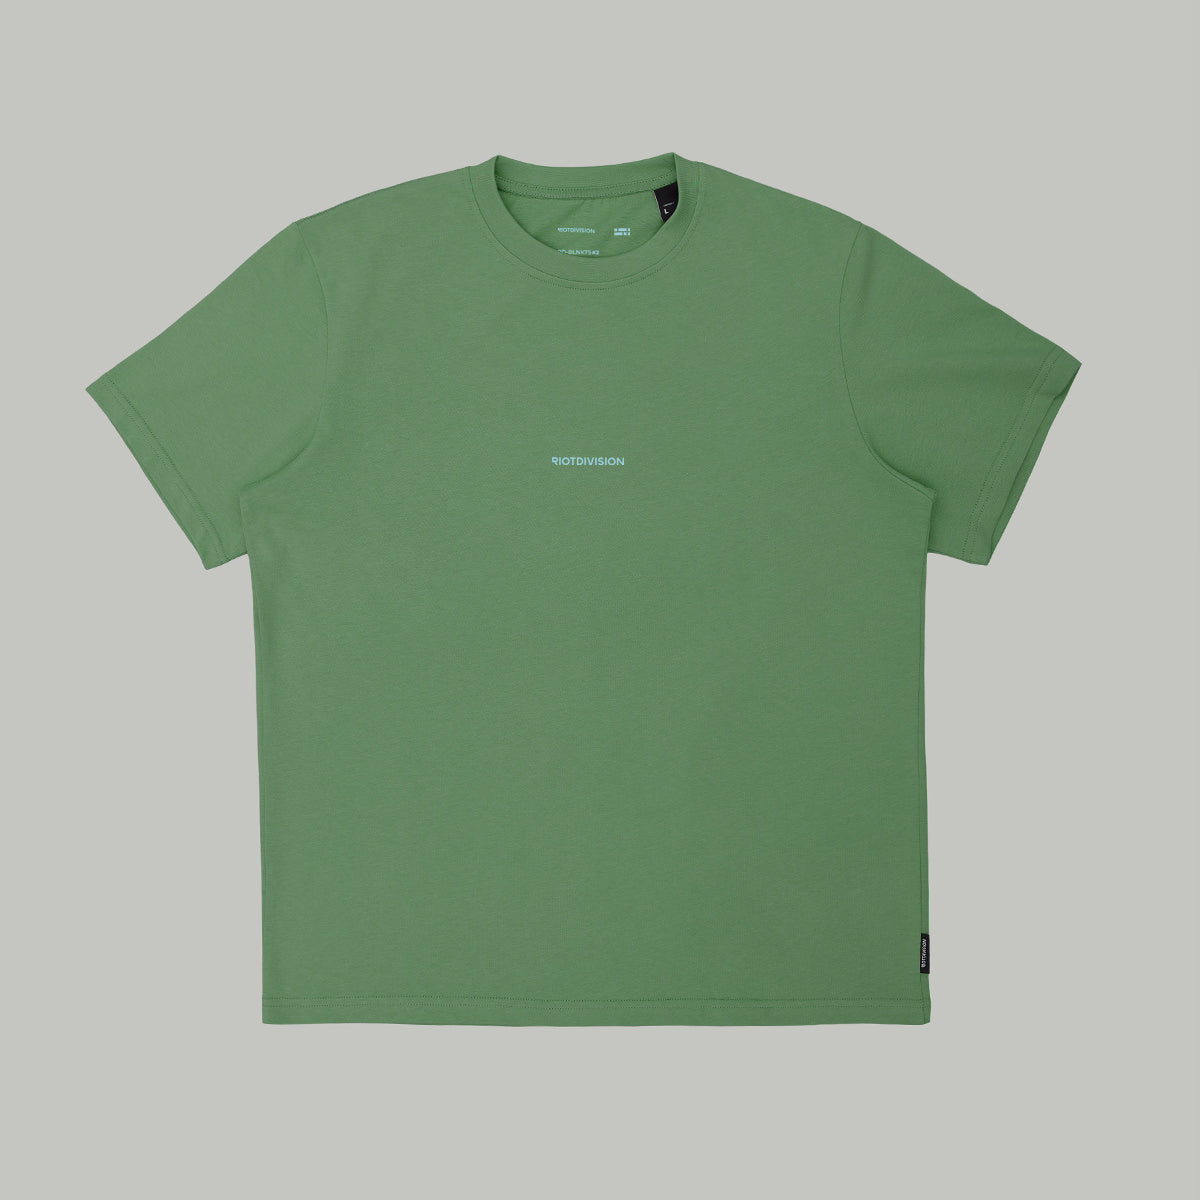 Blank T-Shirt #2 RD-BLNKTS2 LIGHT GREEN